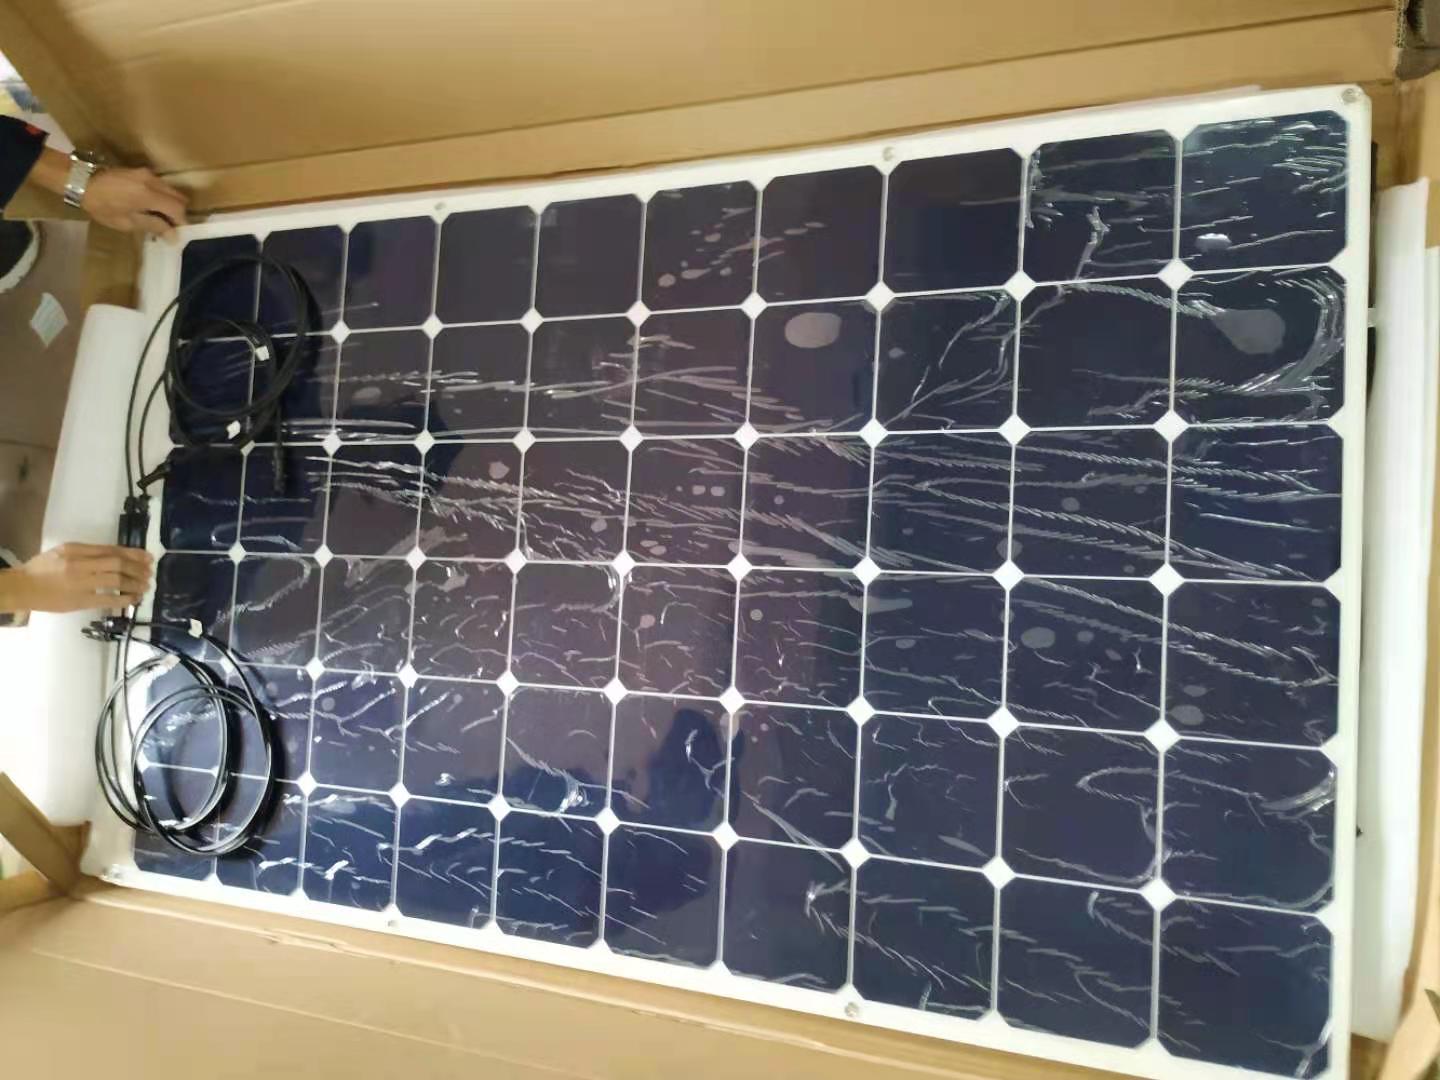 Solarparts Sunpower Flexible solar panel 33.6V 180W 1315X796x3 MM